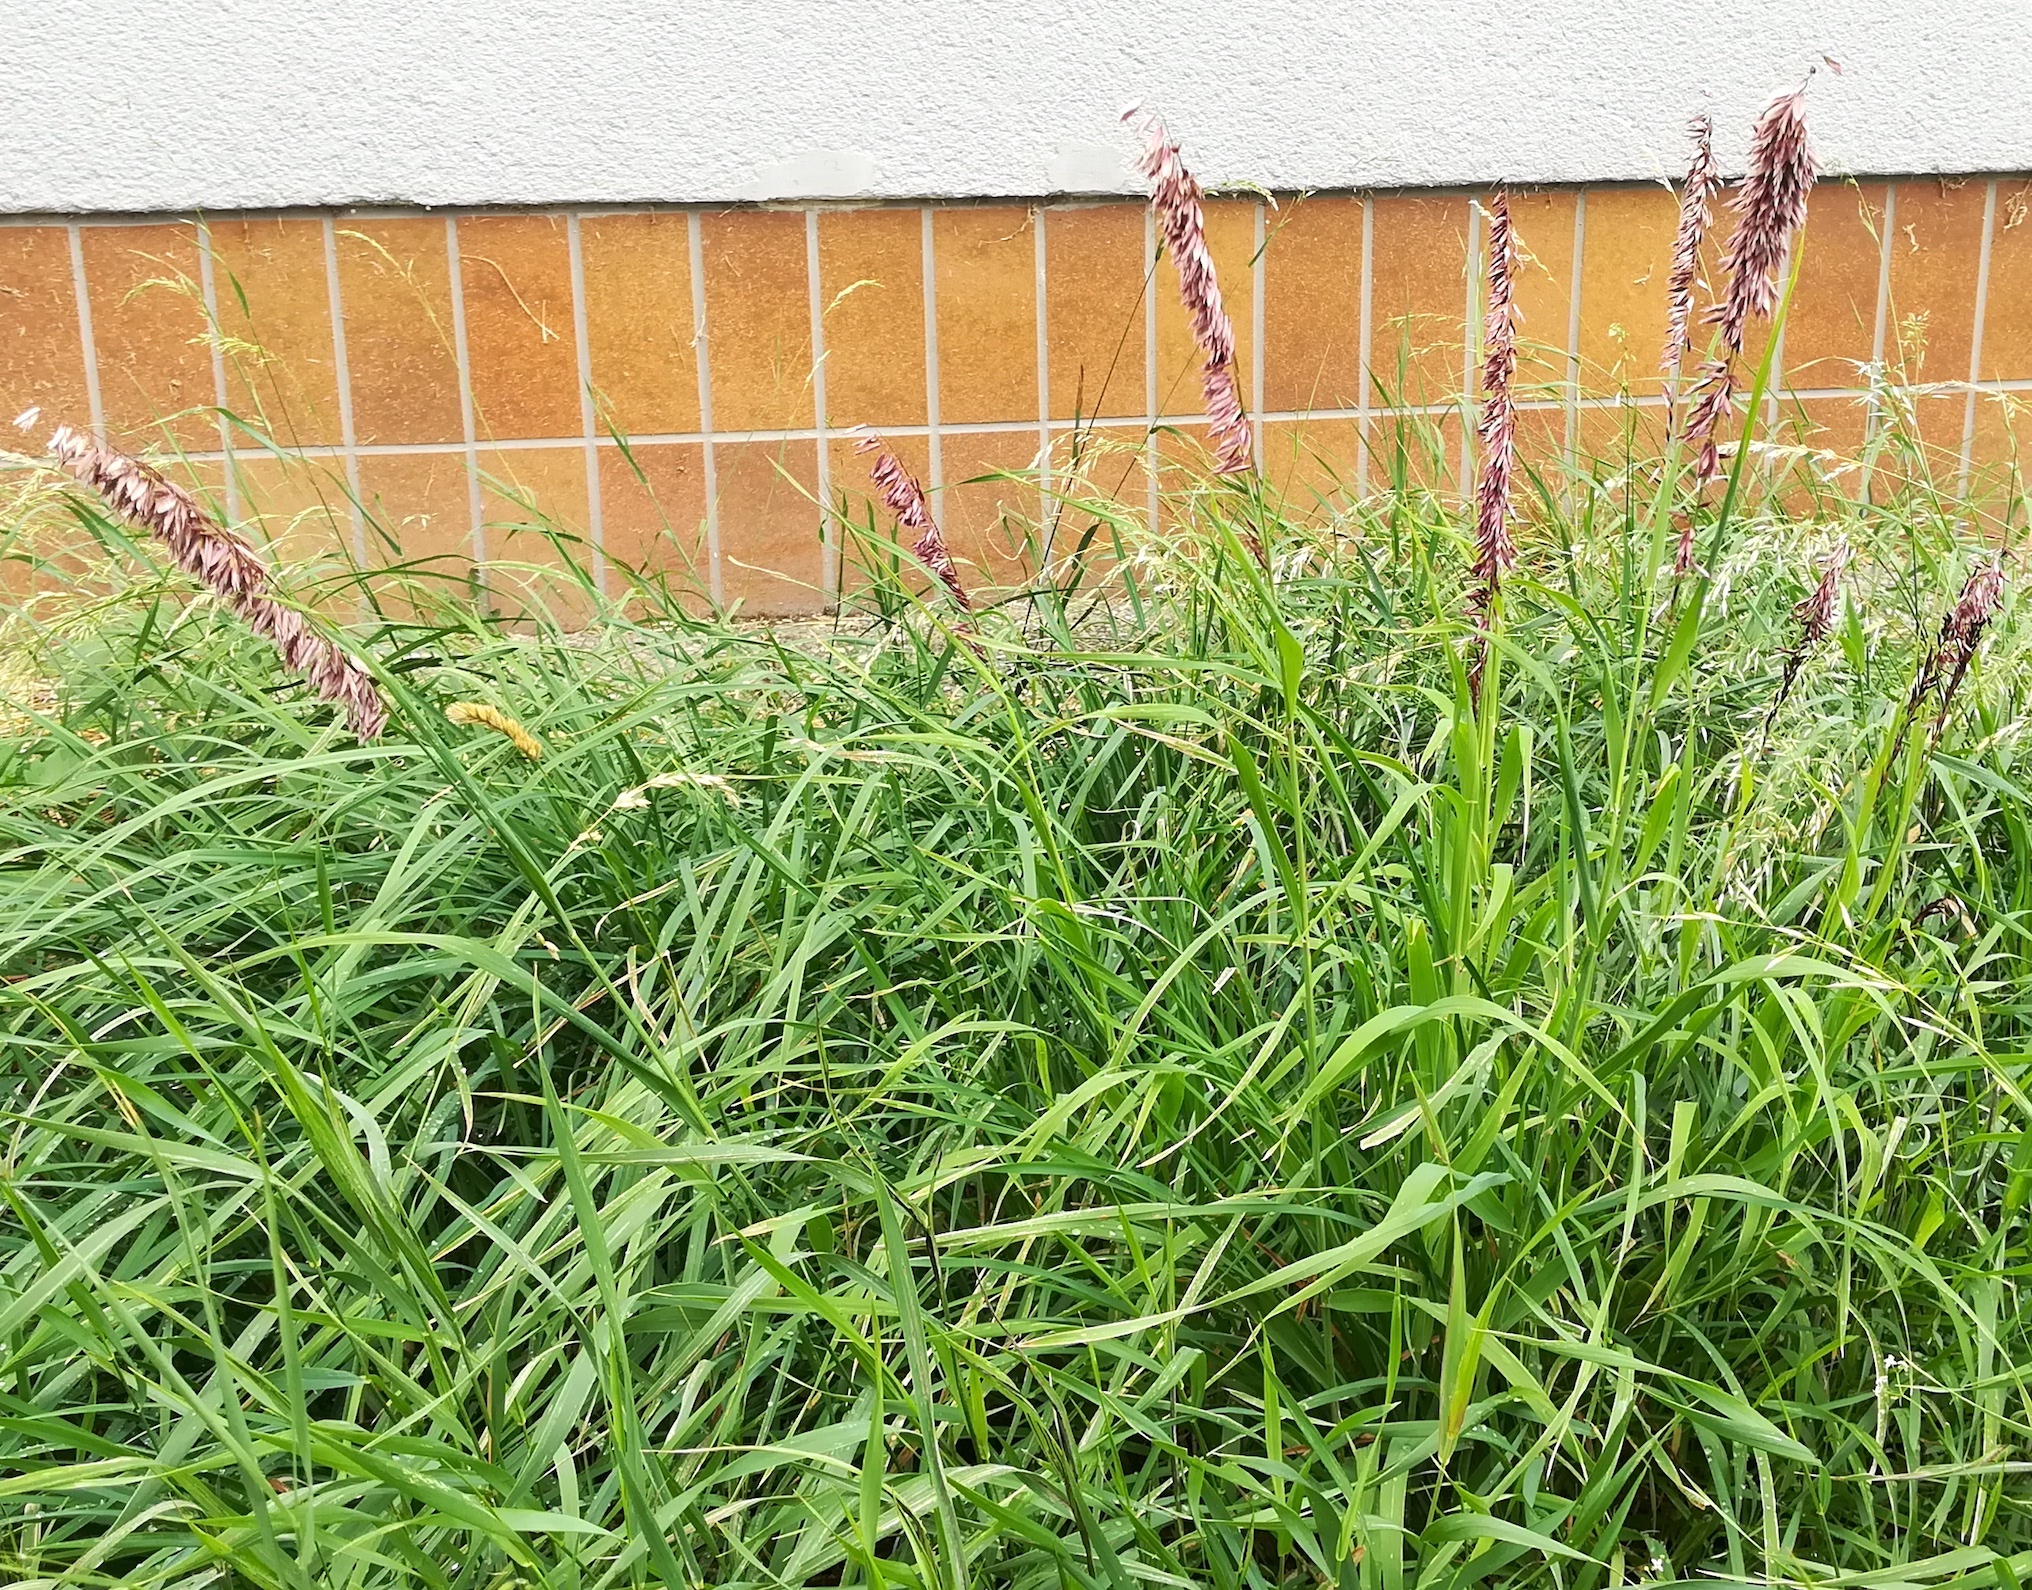 poaceae sp. ignota familienbad gudrunstraße_20190713_154243 2.jpg